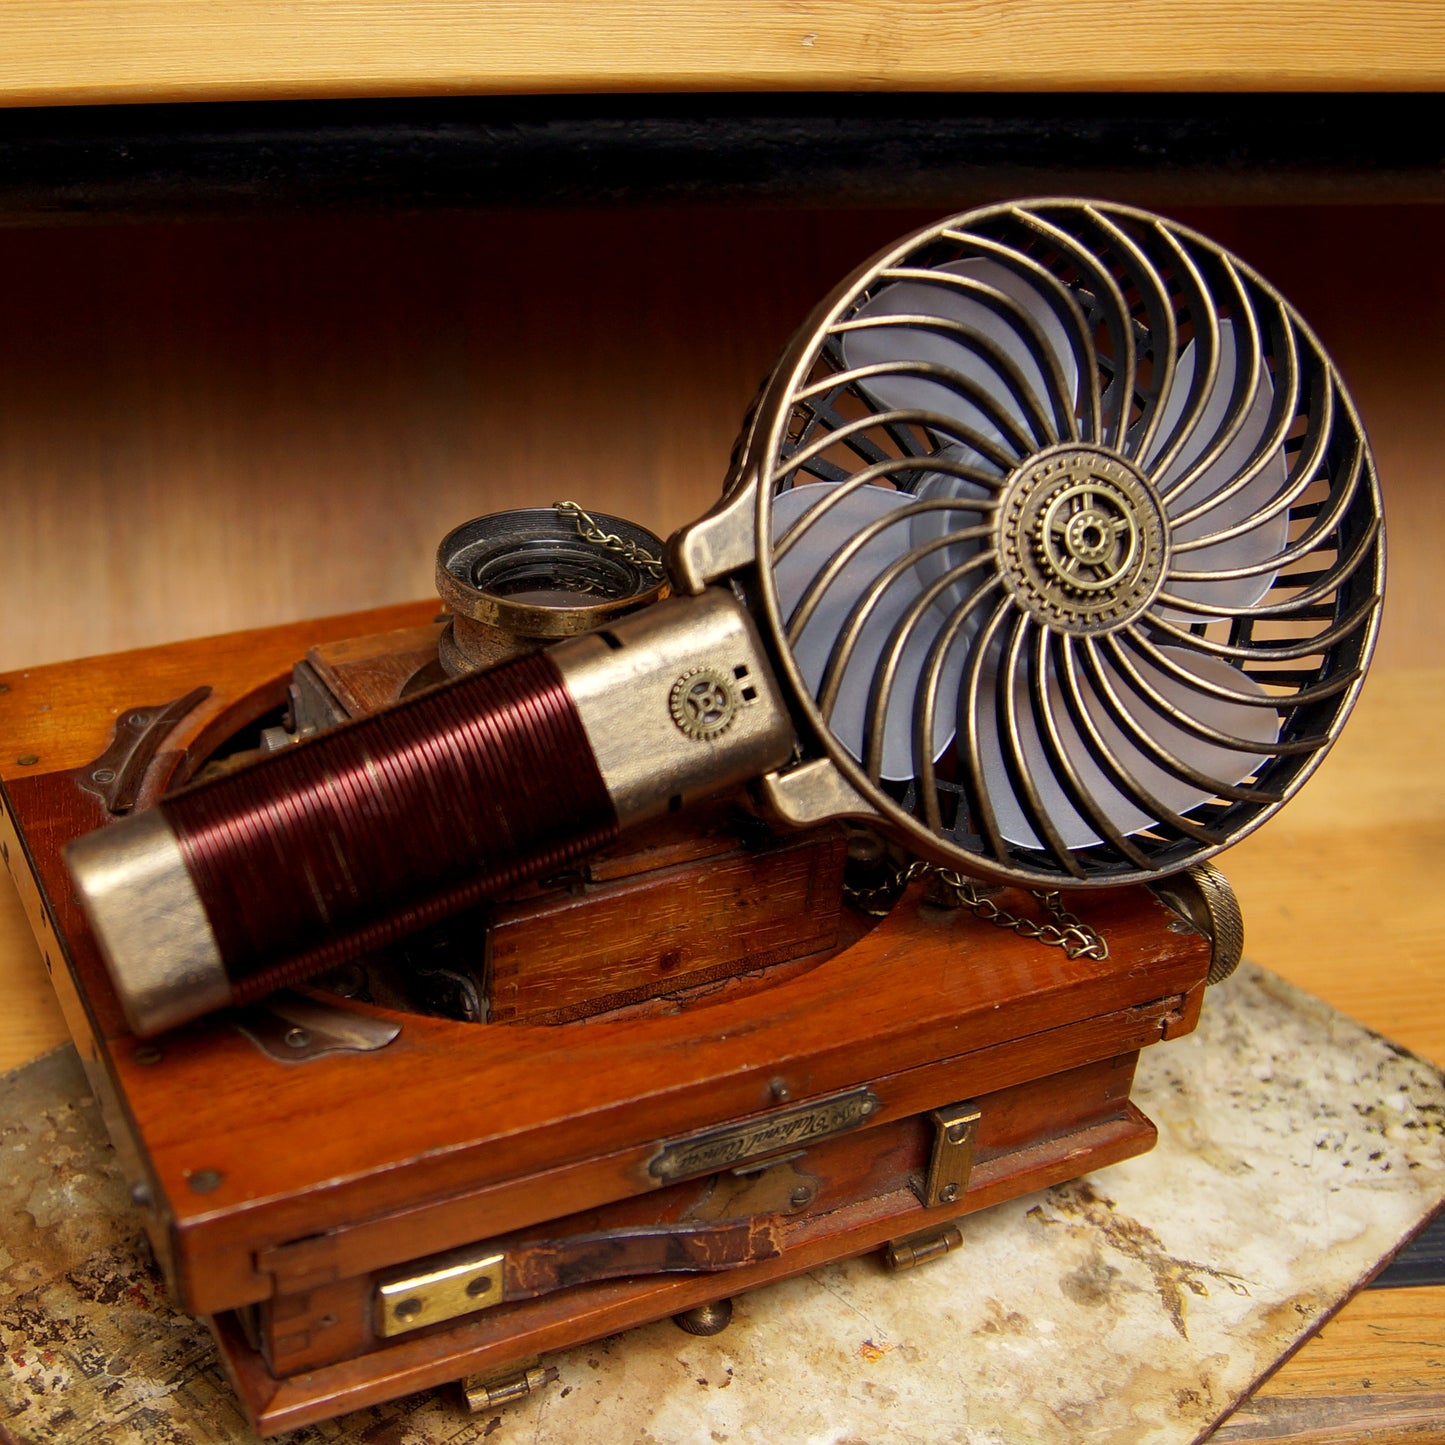 A Maramalive™ Steampunk Retro Portable Handheld Folding USB Charging Mini Fan sitting on top of a wooden box.